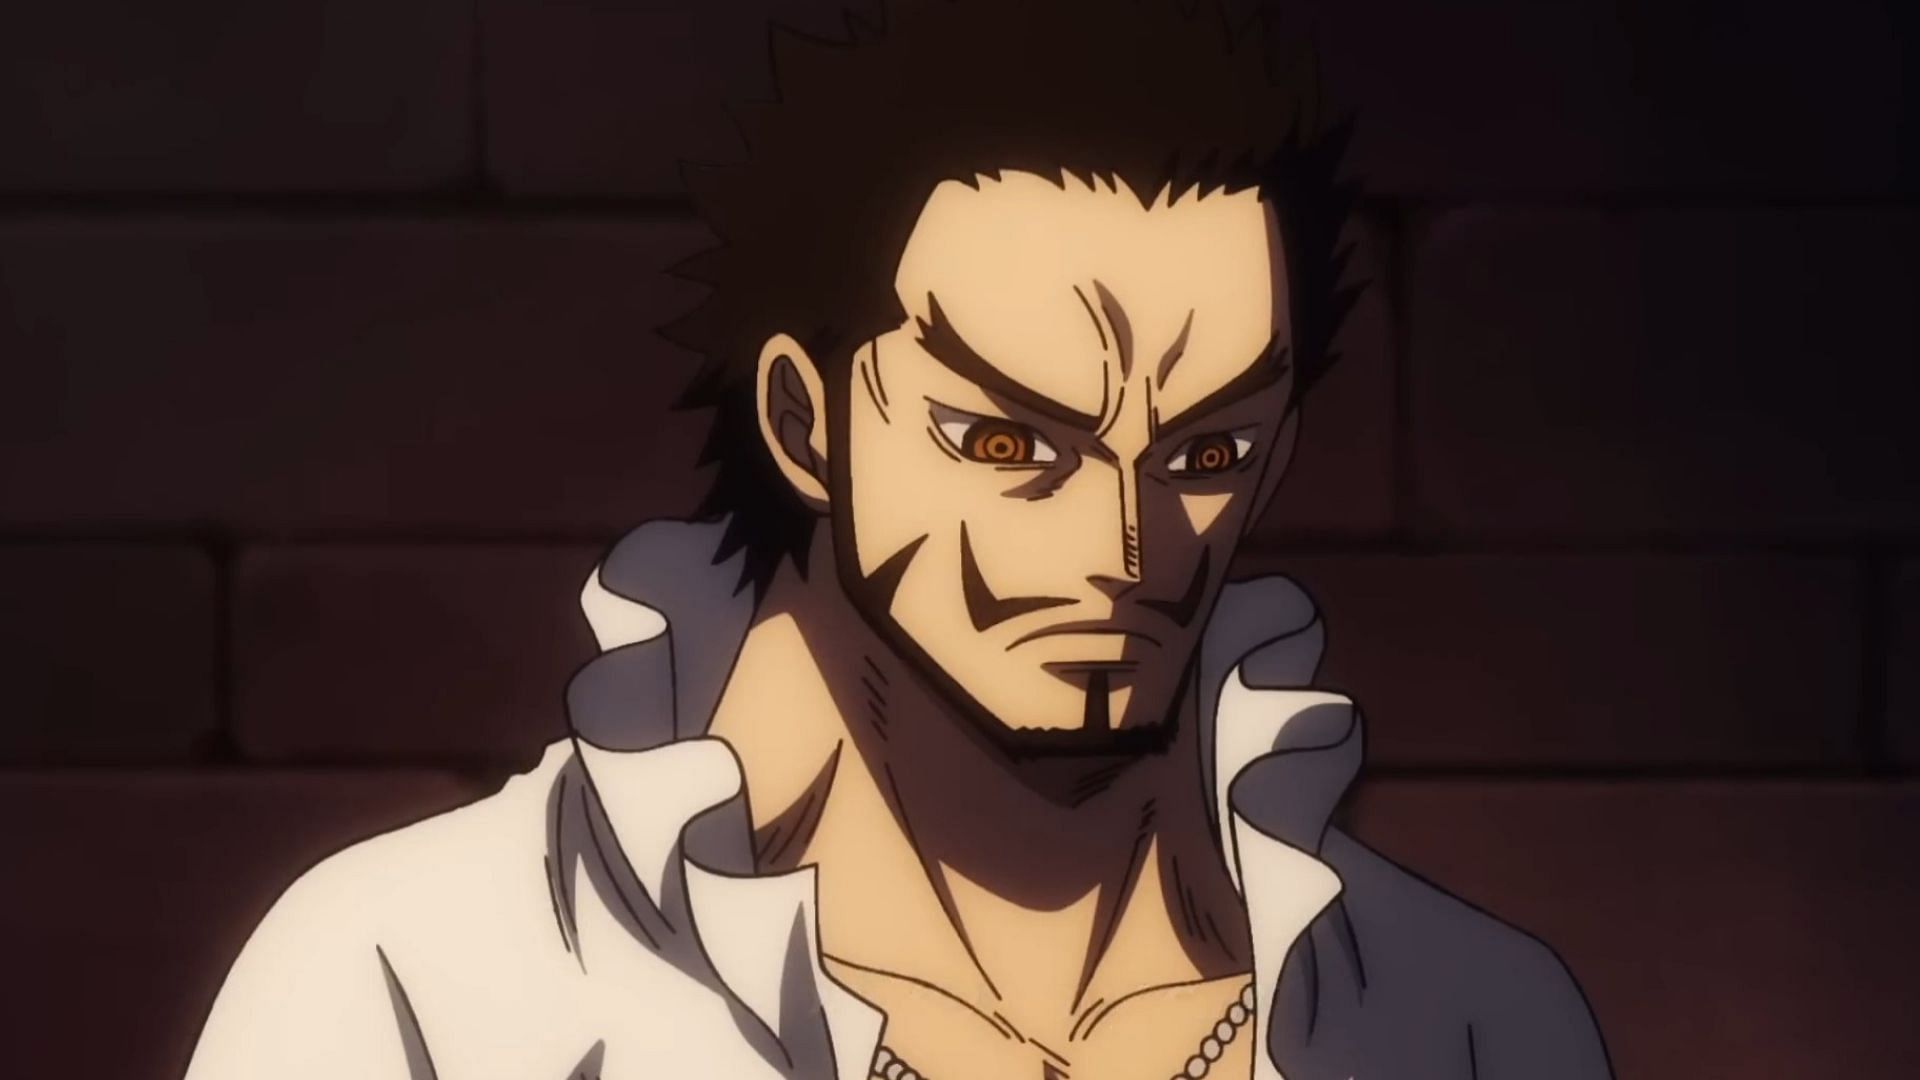 Mihawk as seen in One Piece (Image via Toei Animation)